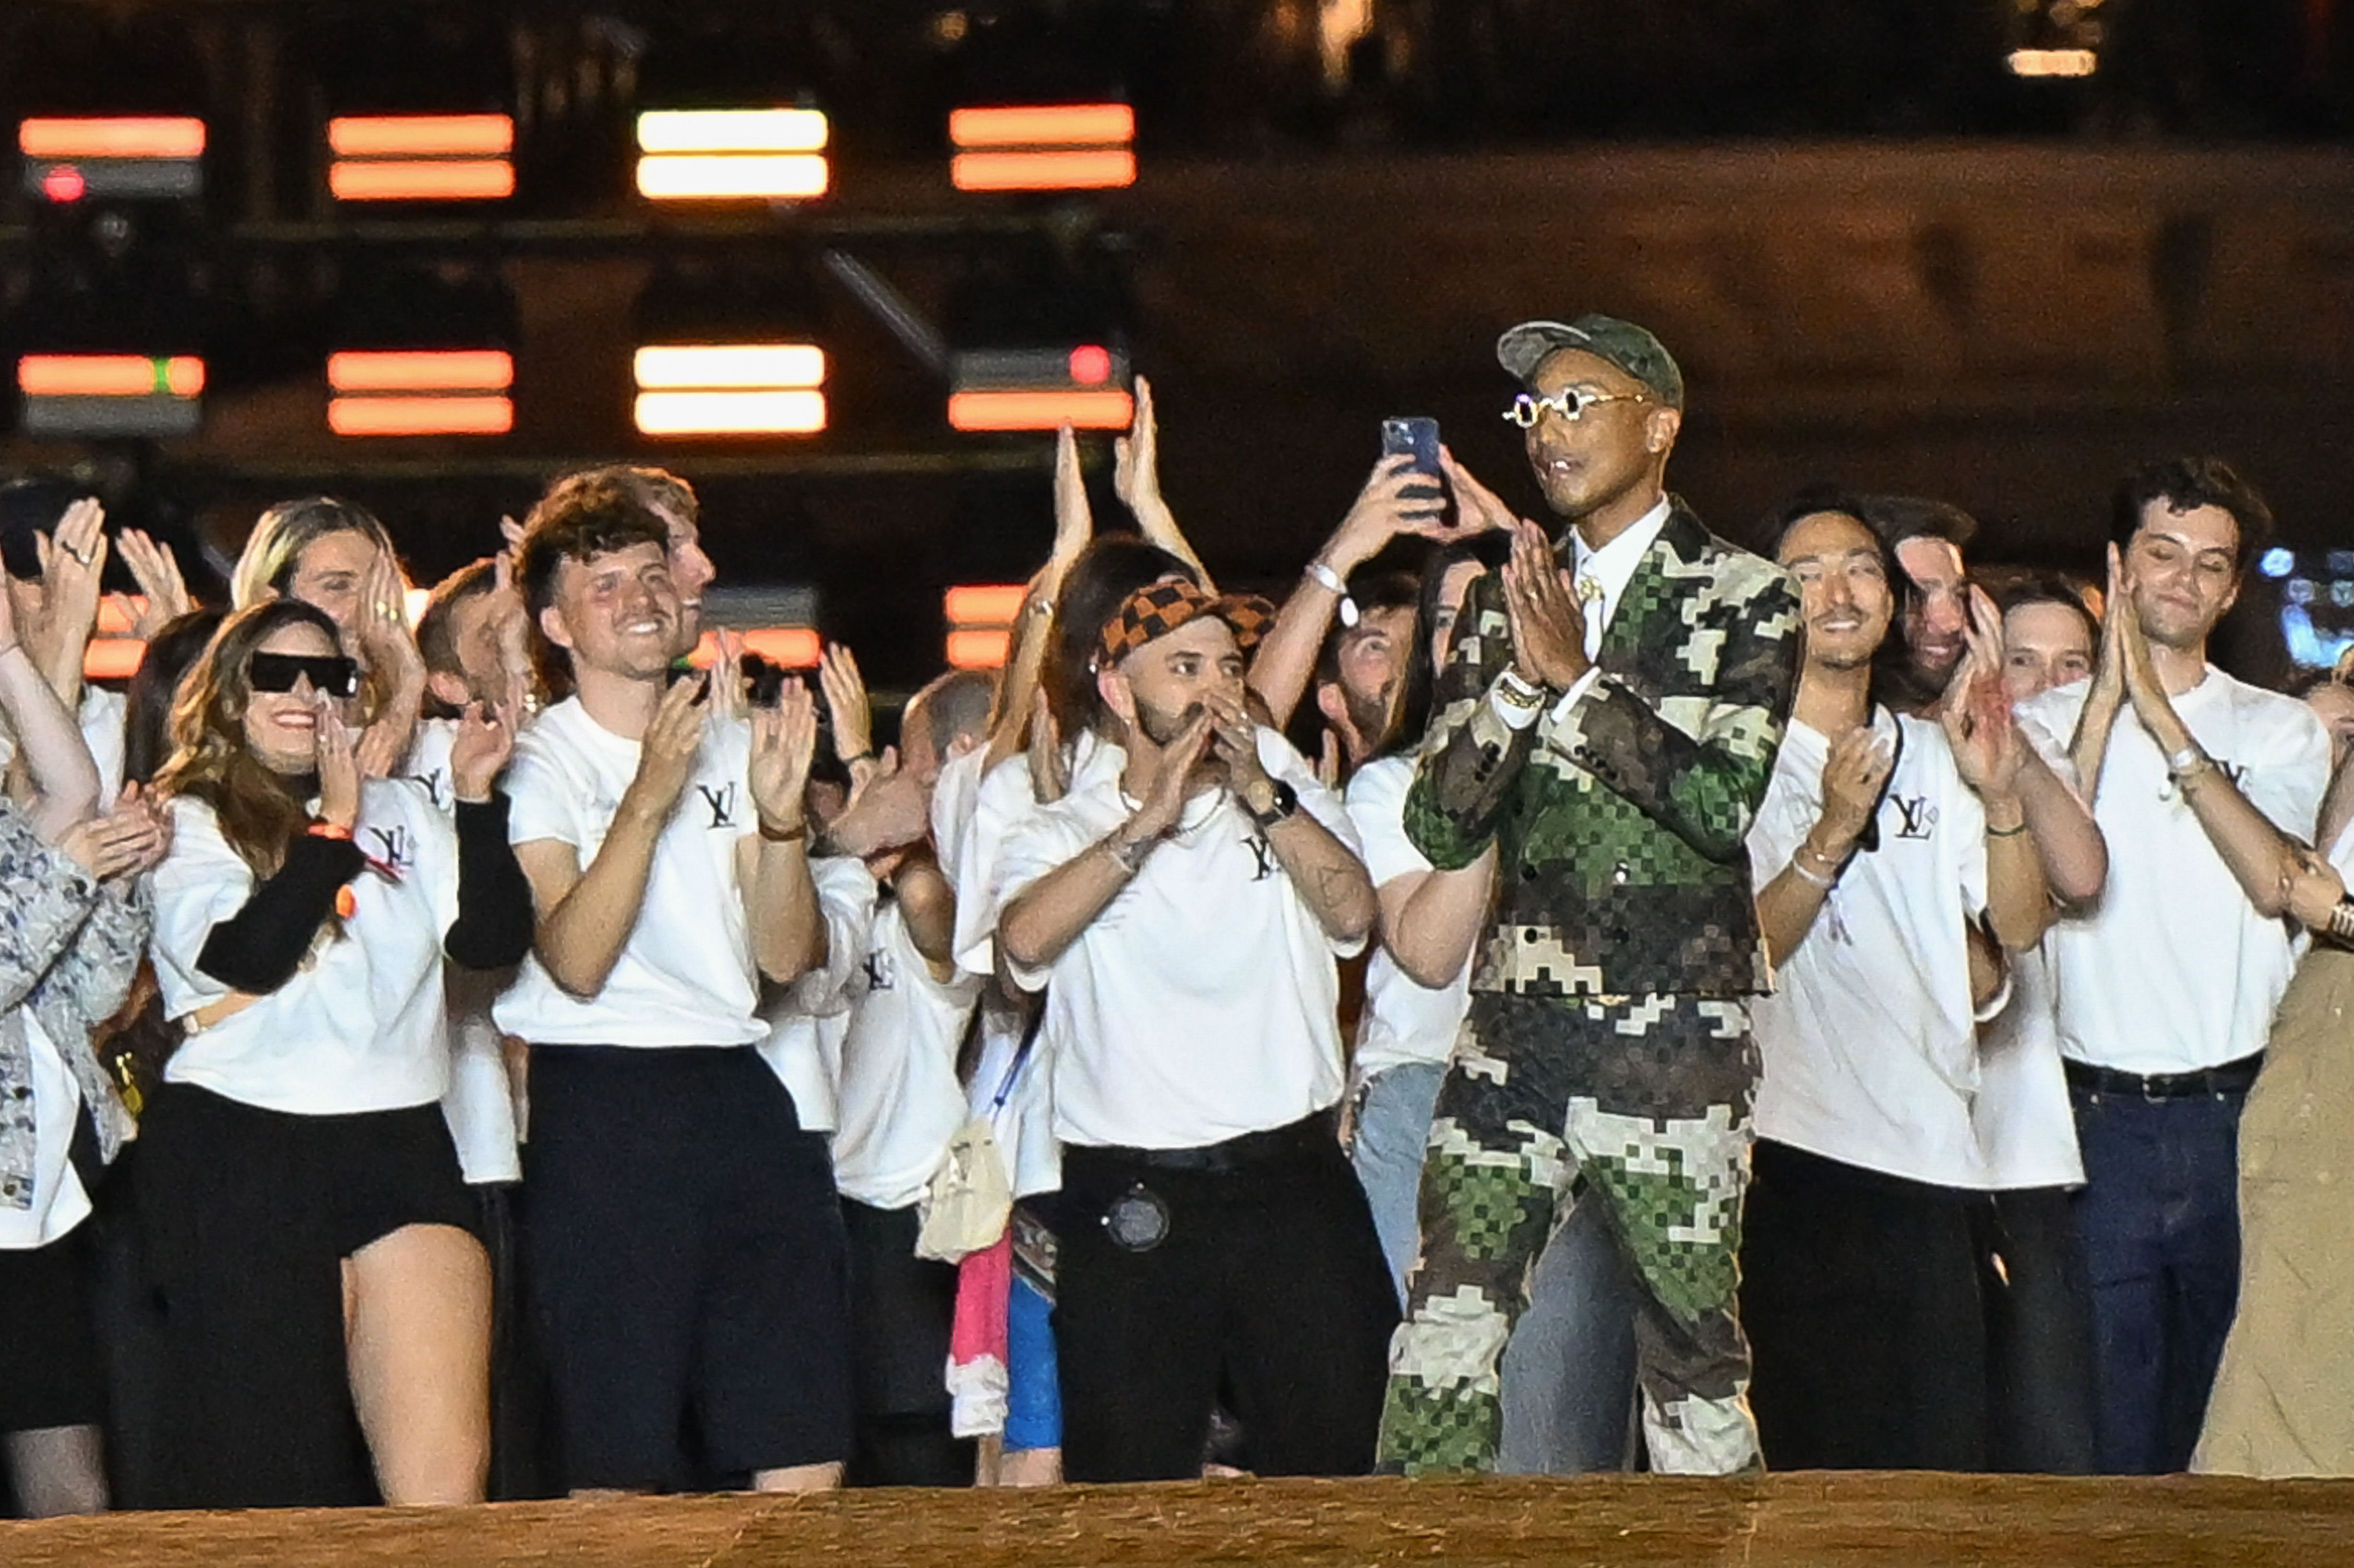 Inside Pharrell Williams' Debut Star-Studded Louis Vuitton Men's Show